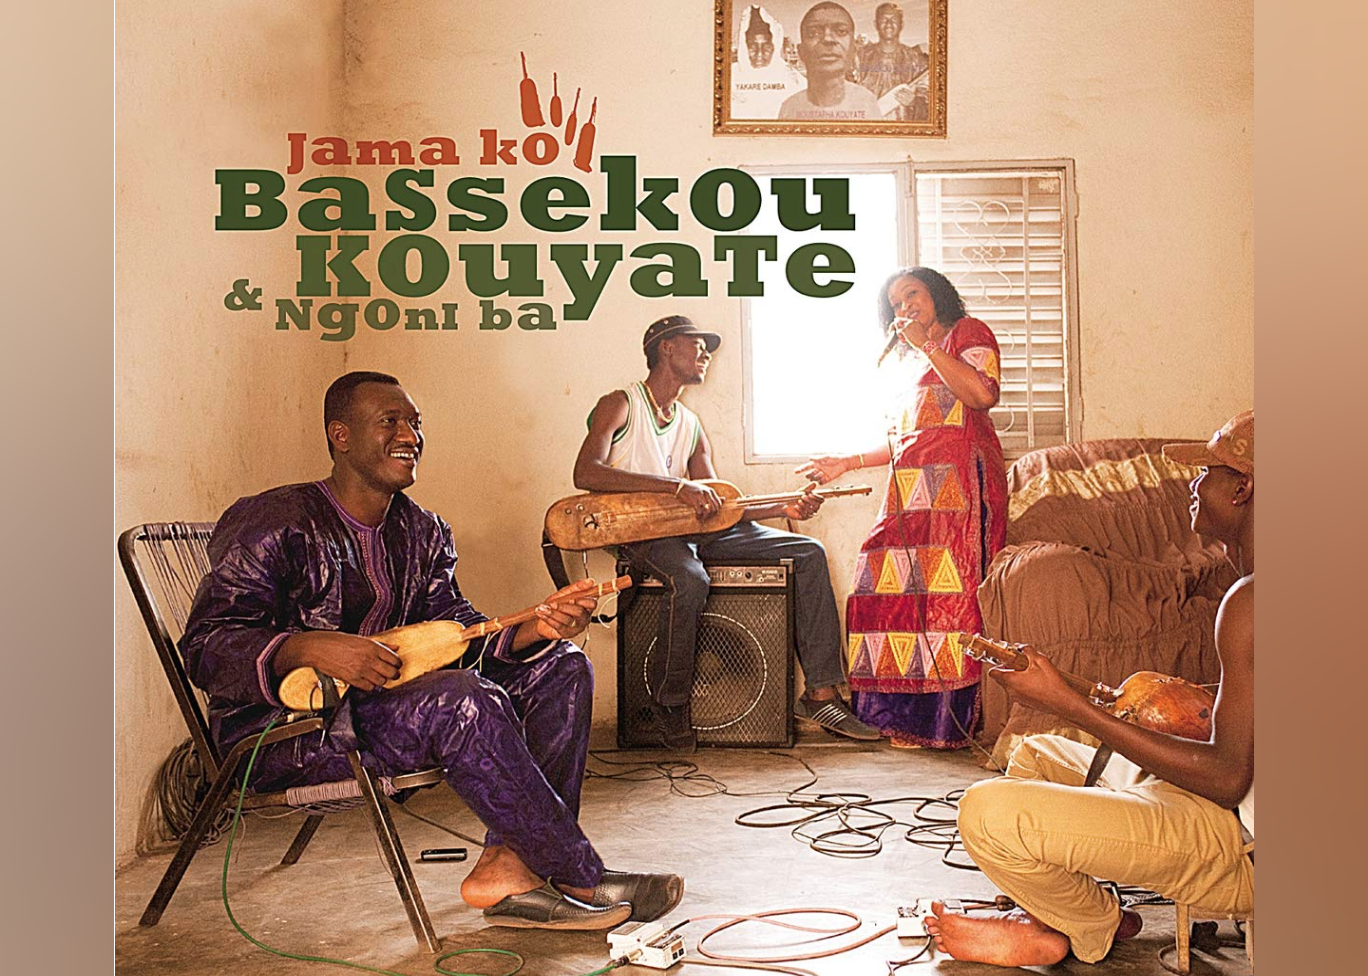 Bassekou Kouyate & Ngoni Ba having a jam session in a living room.